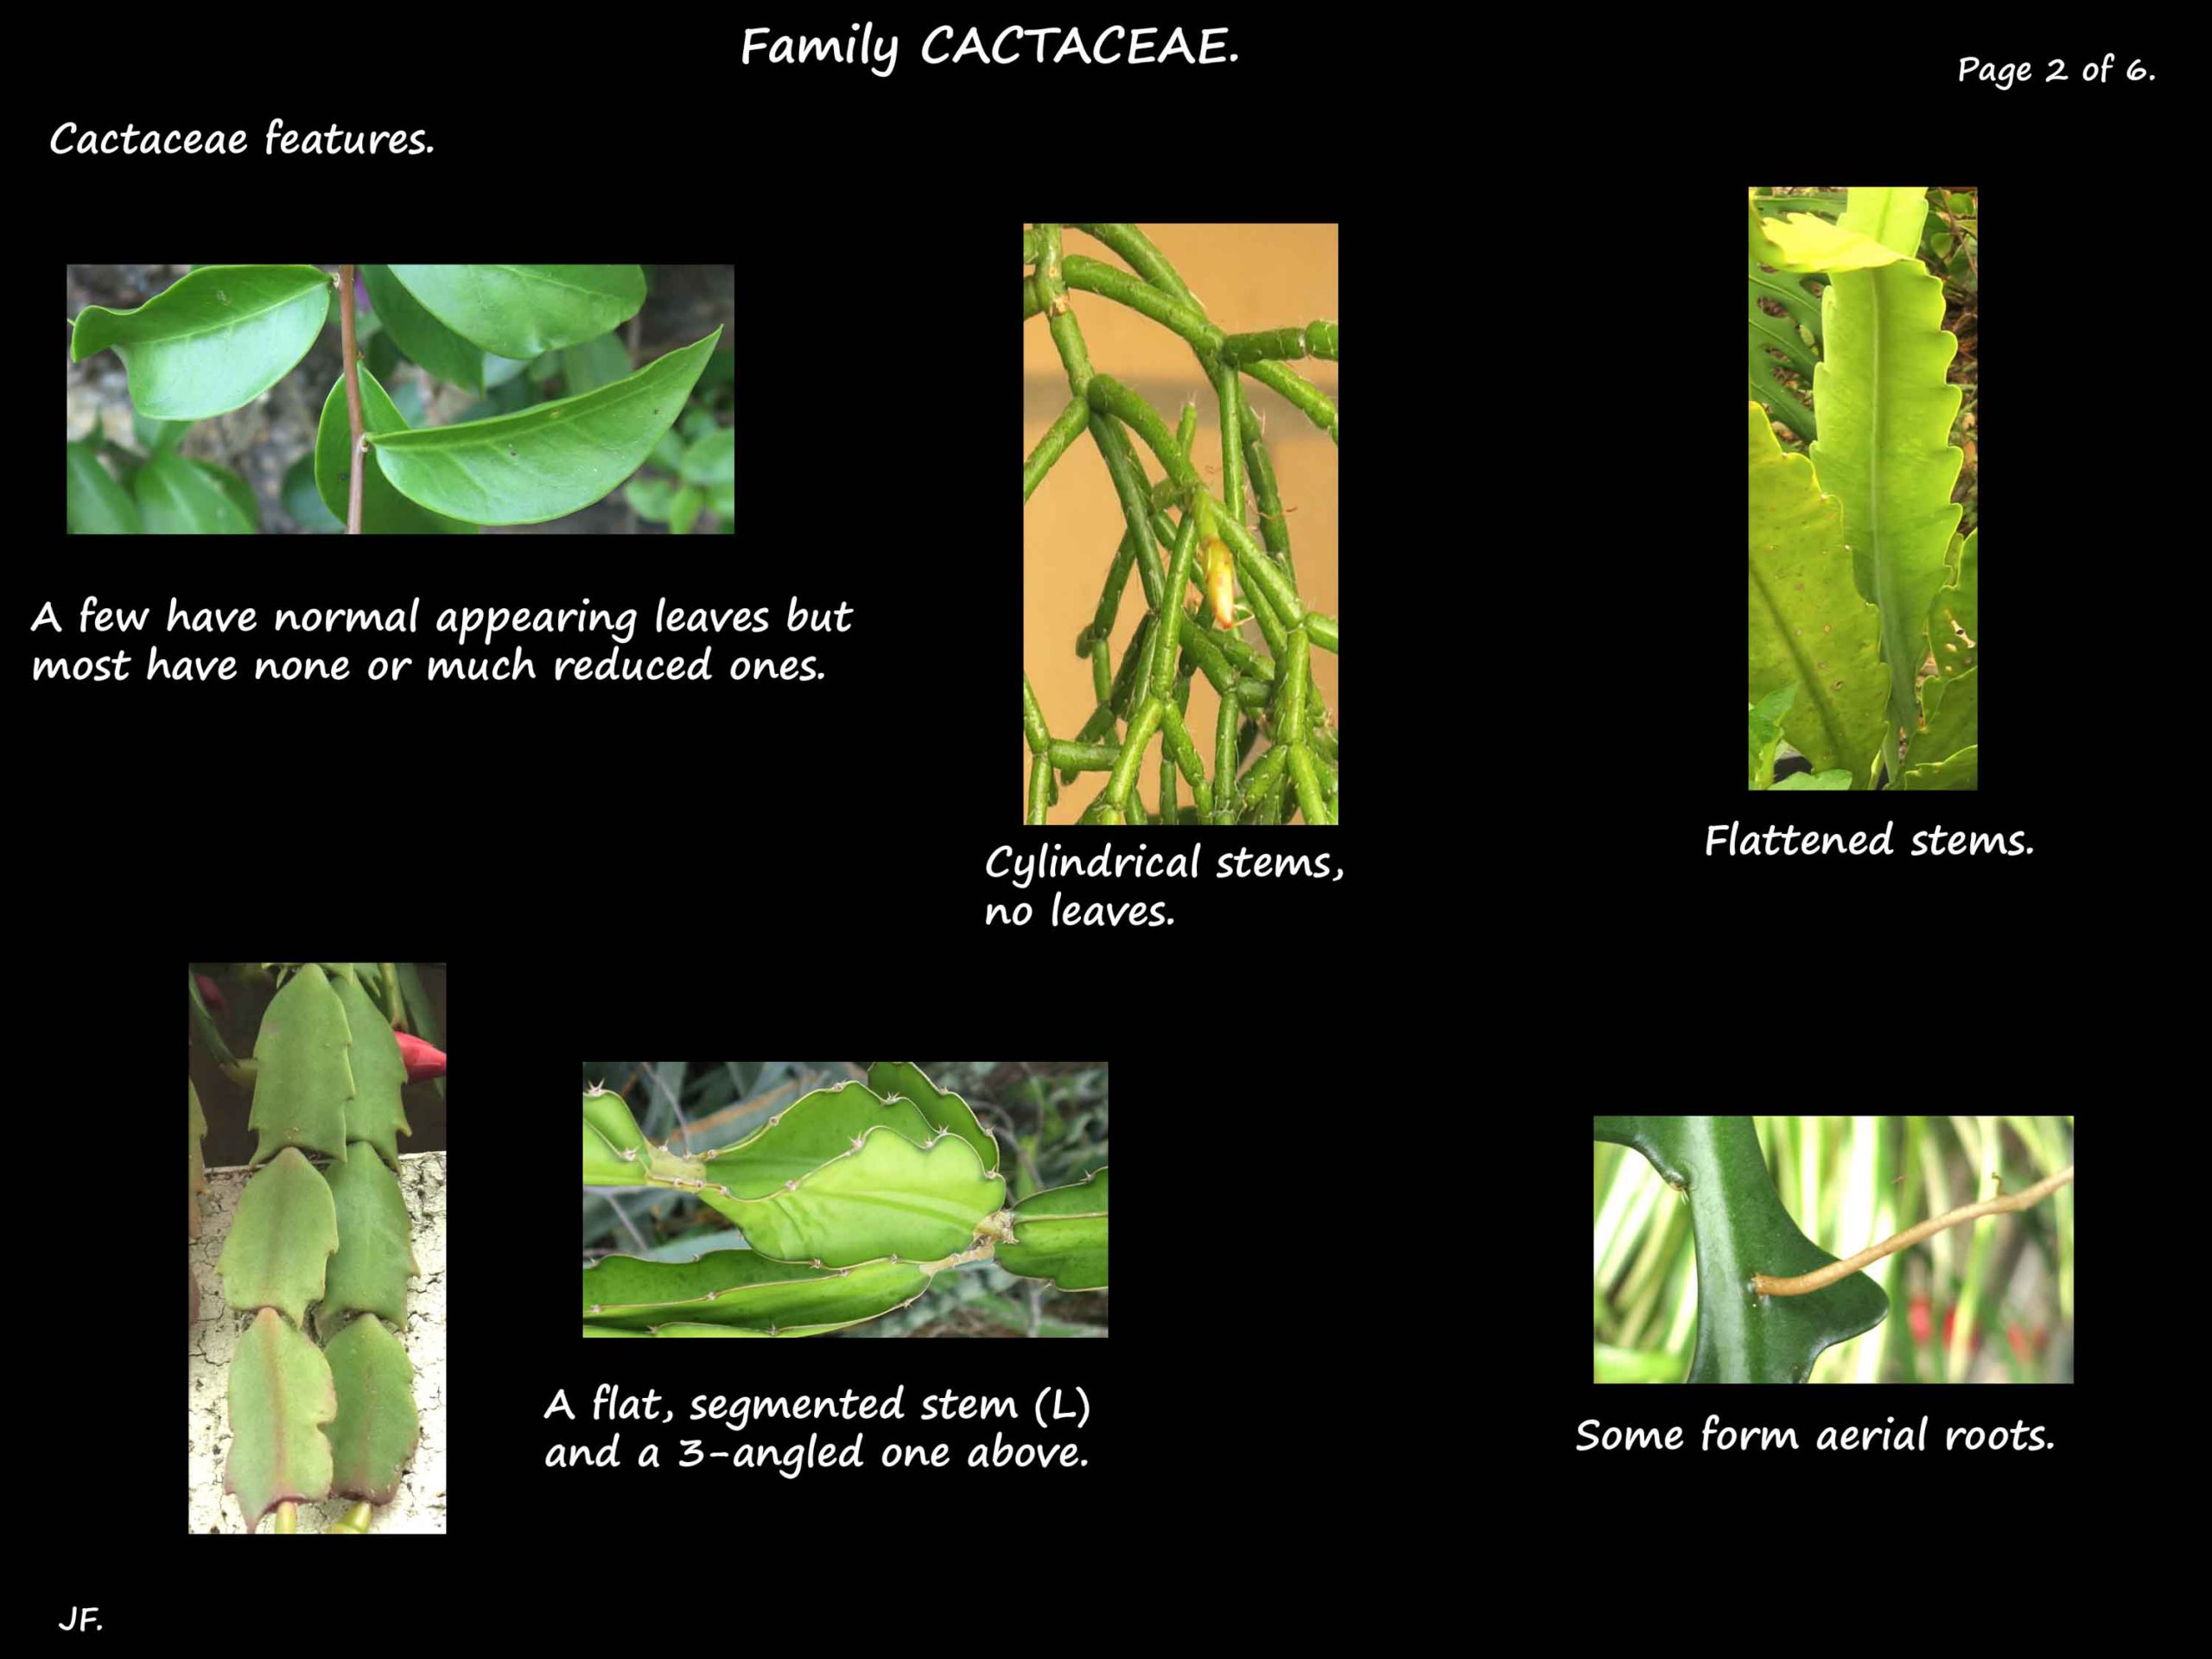 2 Cactaceae leaves